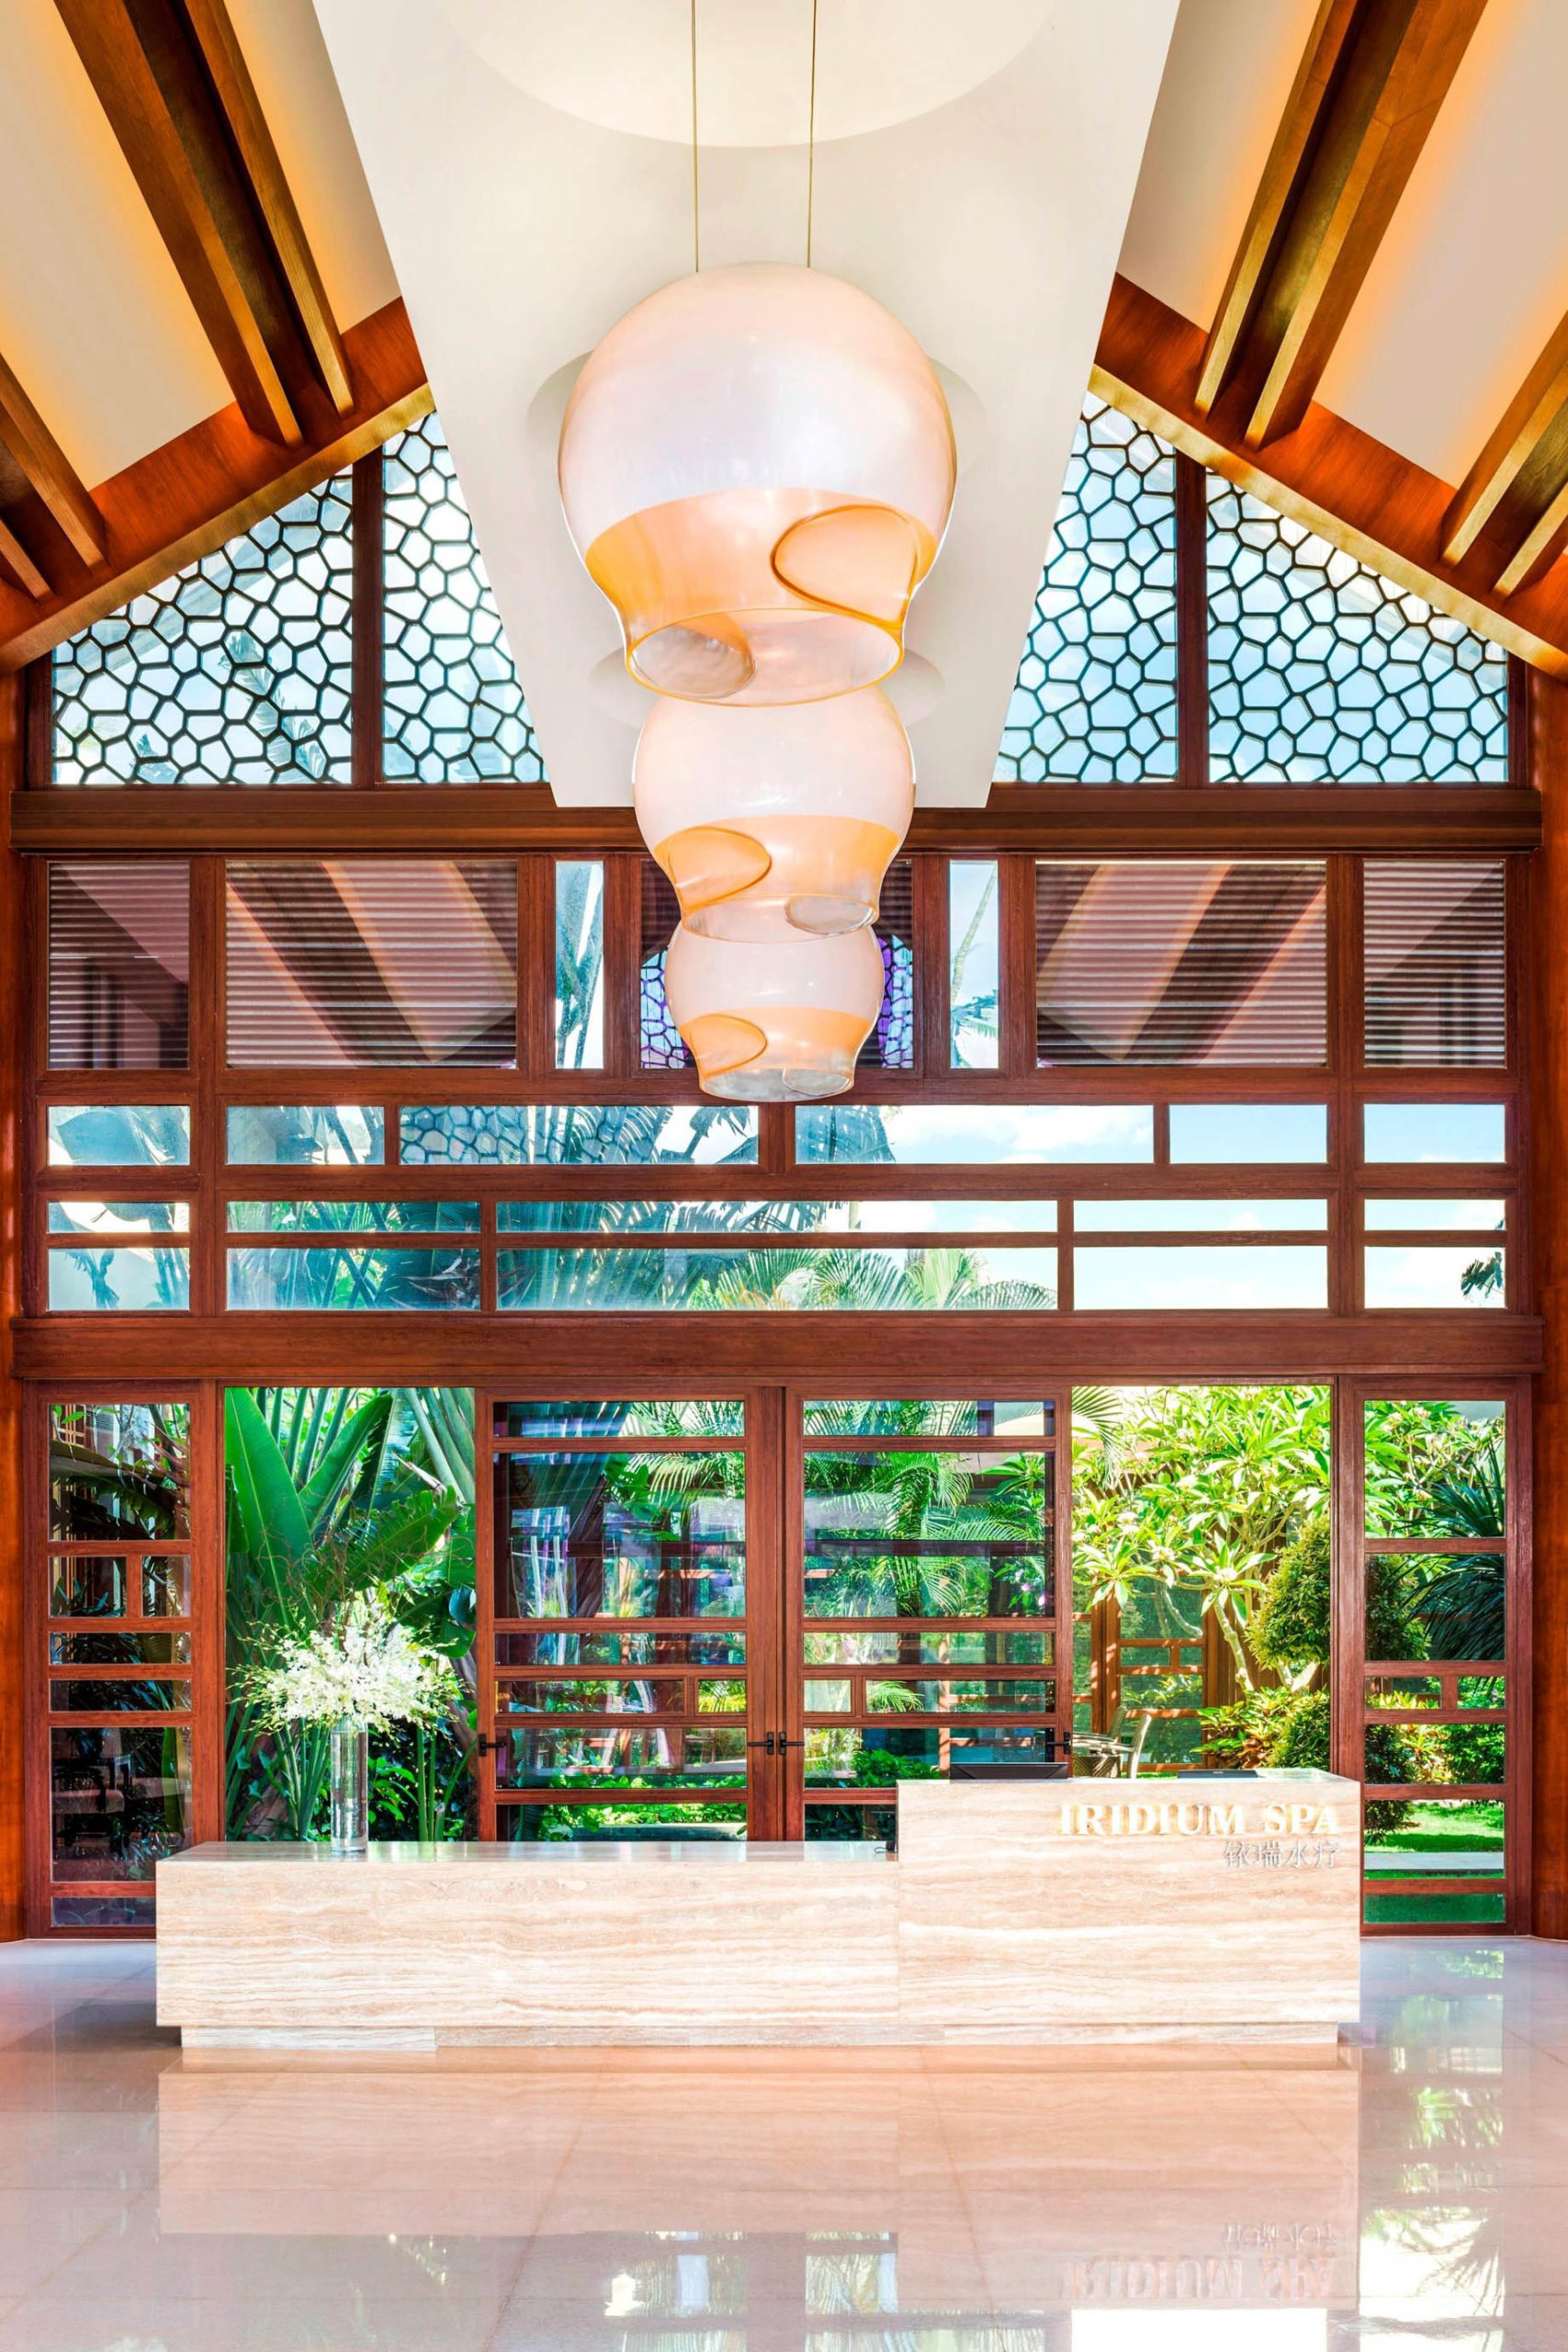 The St. Regis Sanya Yalong Bay Resort – Hainan, China – Iridium Spa Reception Desk